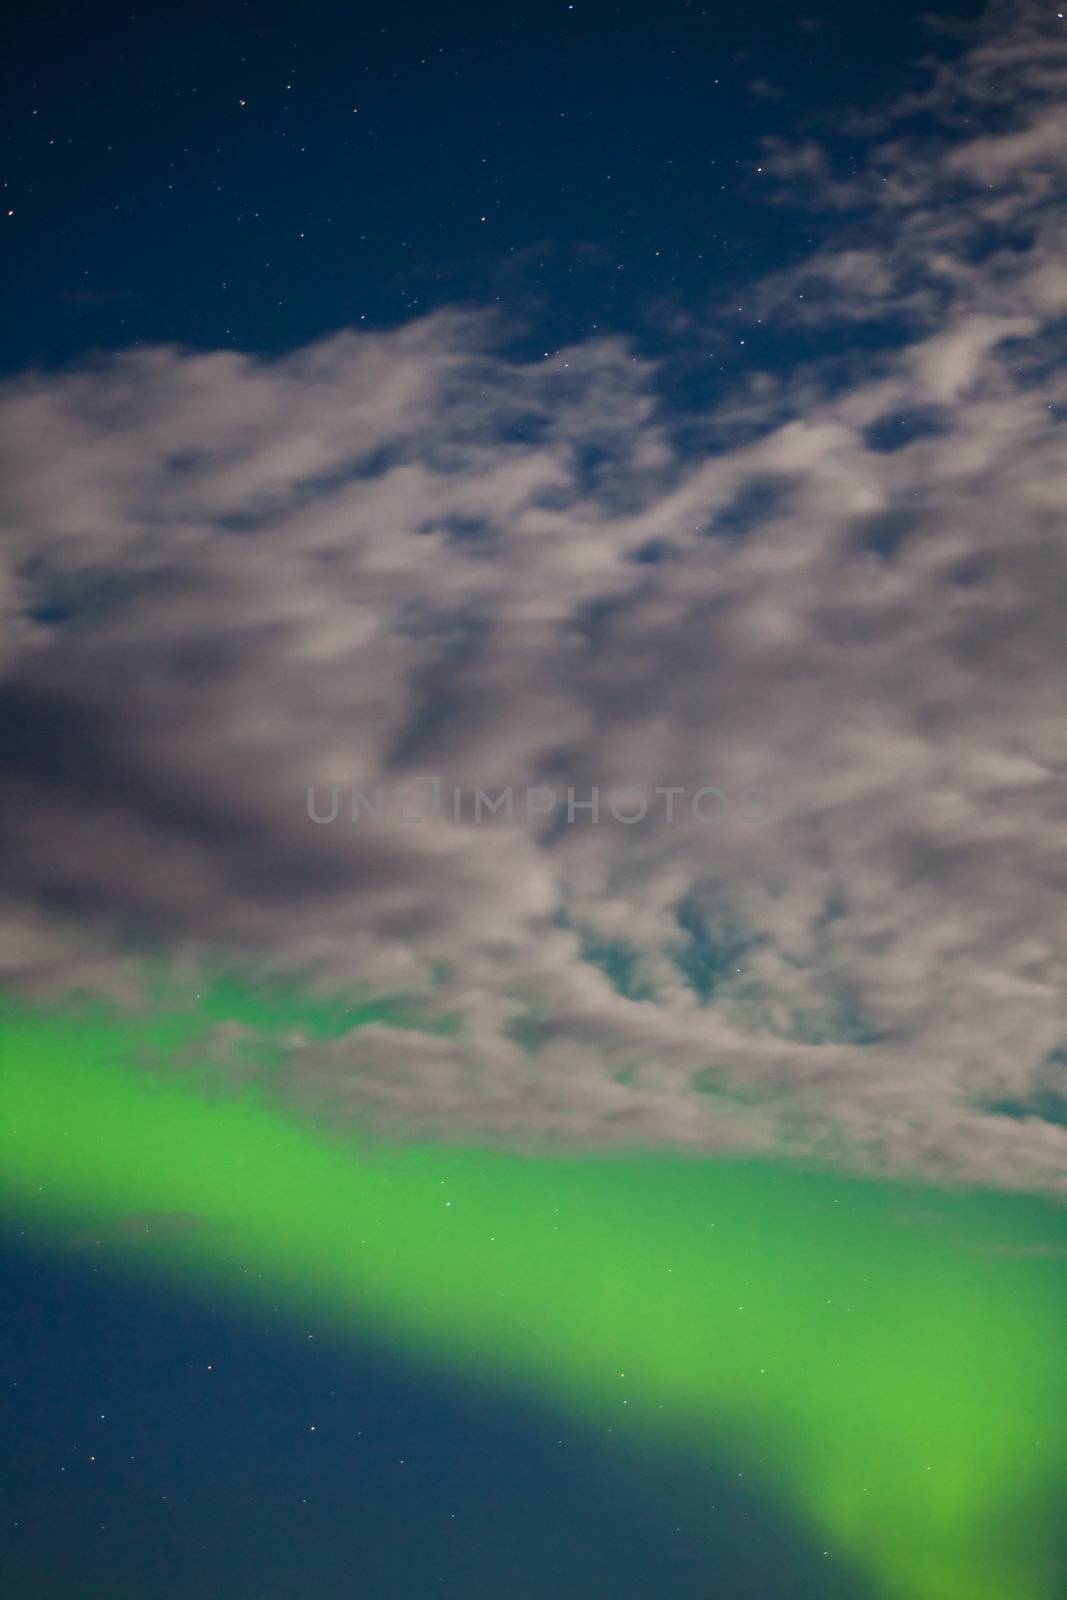 Aurora borealis (Northern lights) display by PiLens